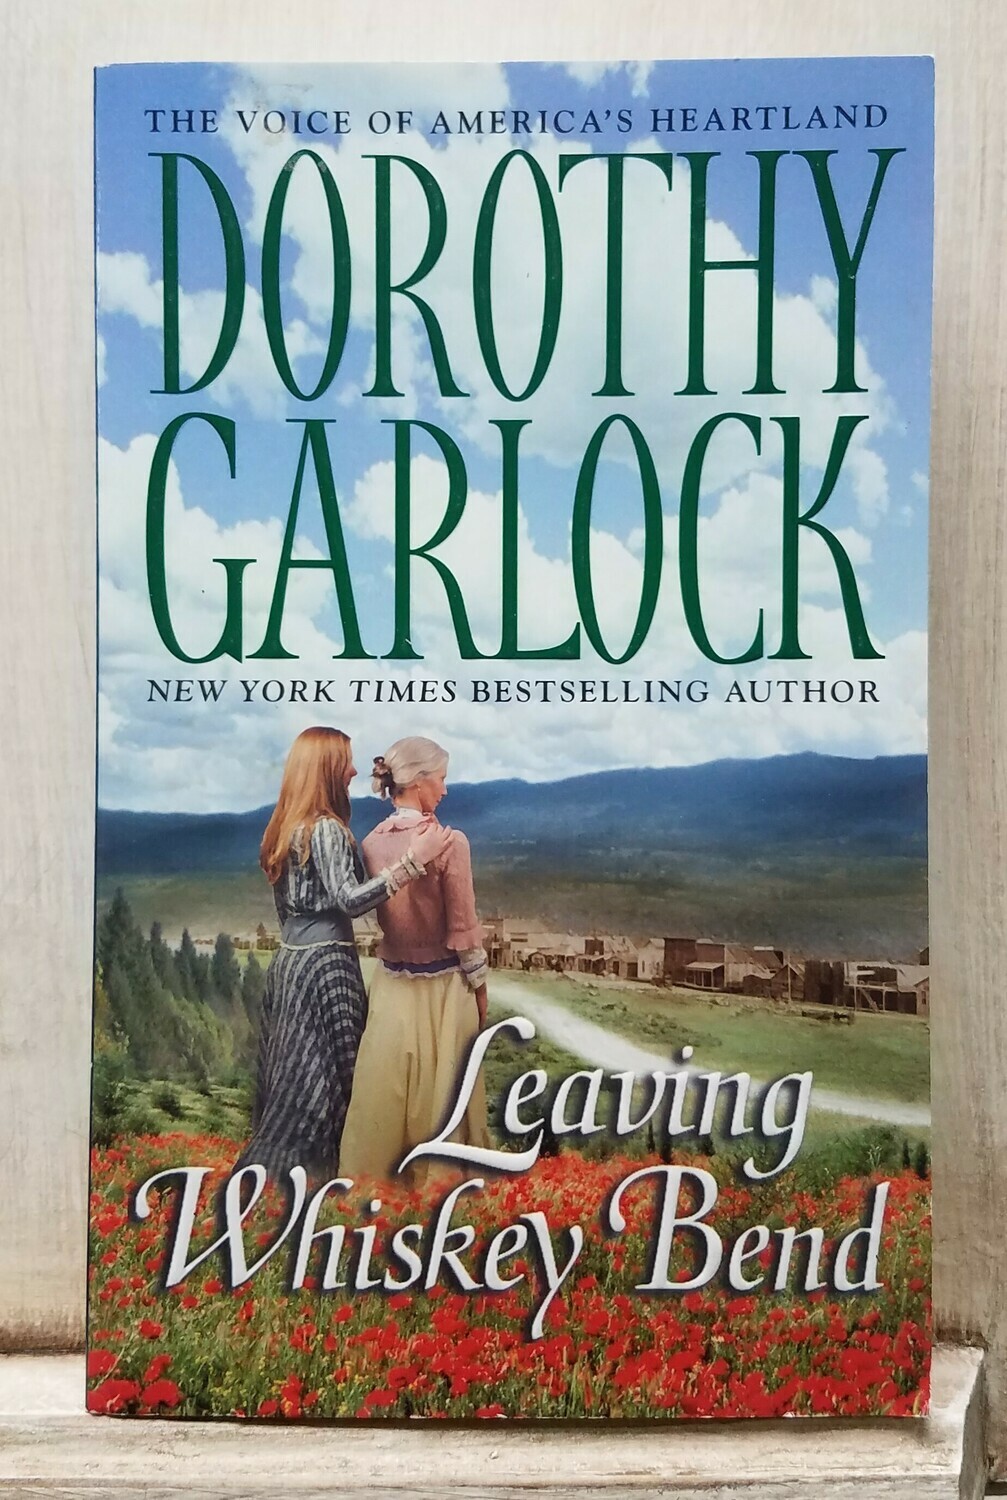 Leaving Whiskey Bend by Dorothy Garlock